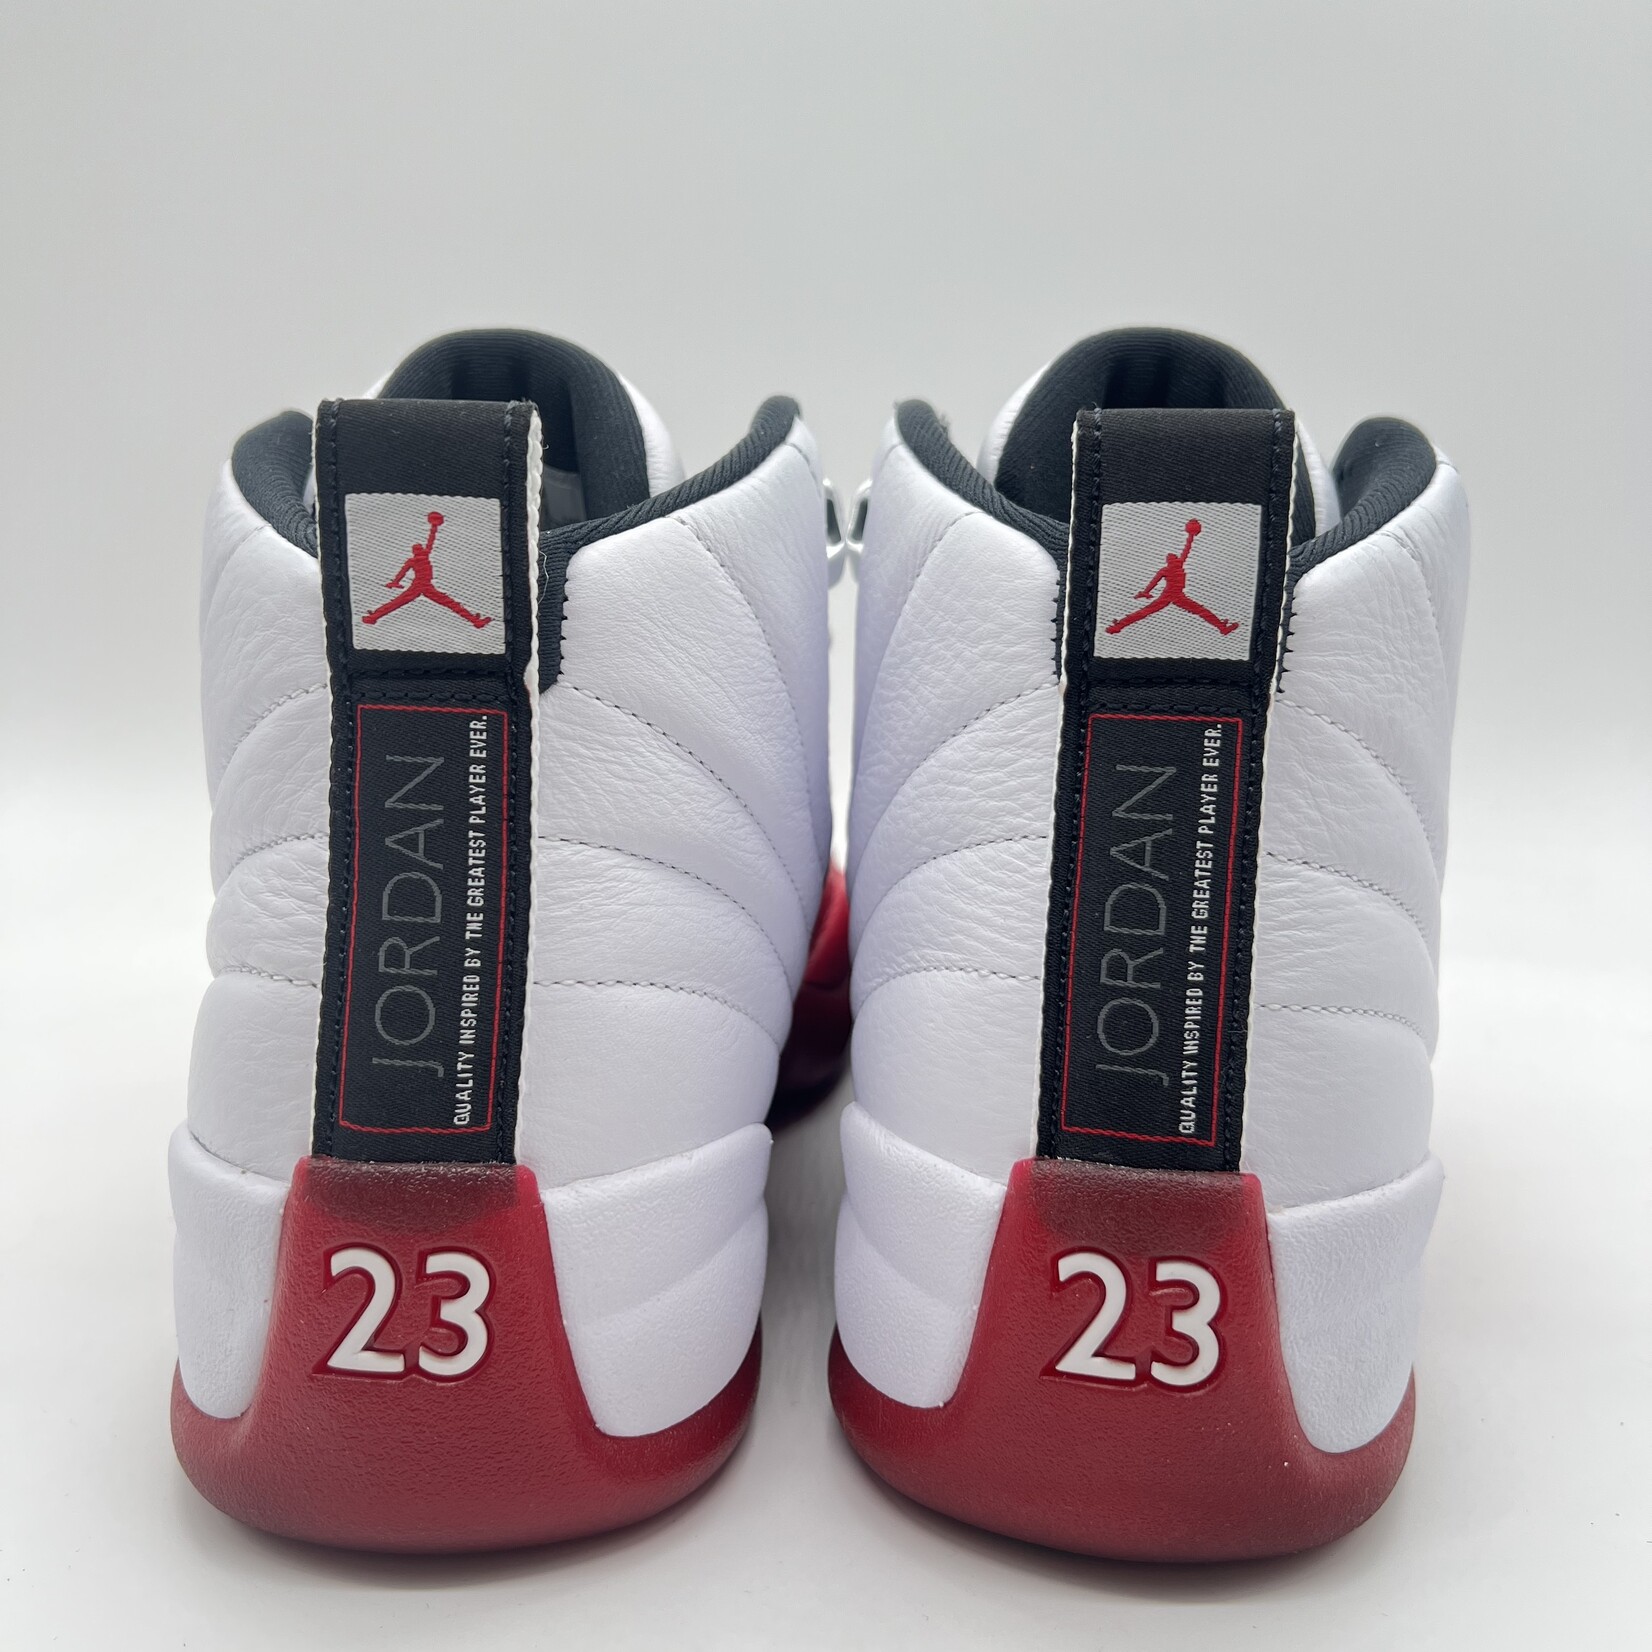 Jordan 12 Cherry